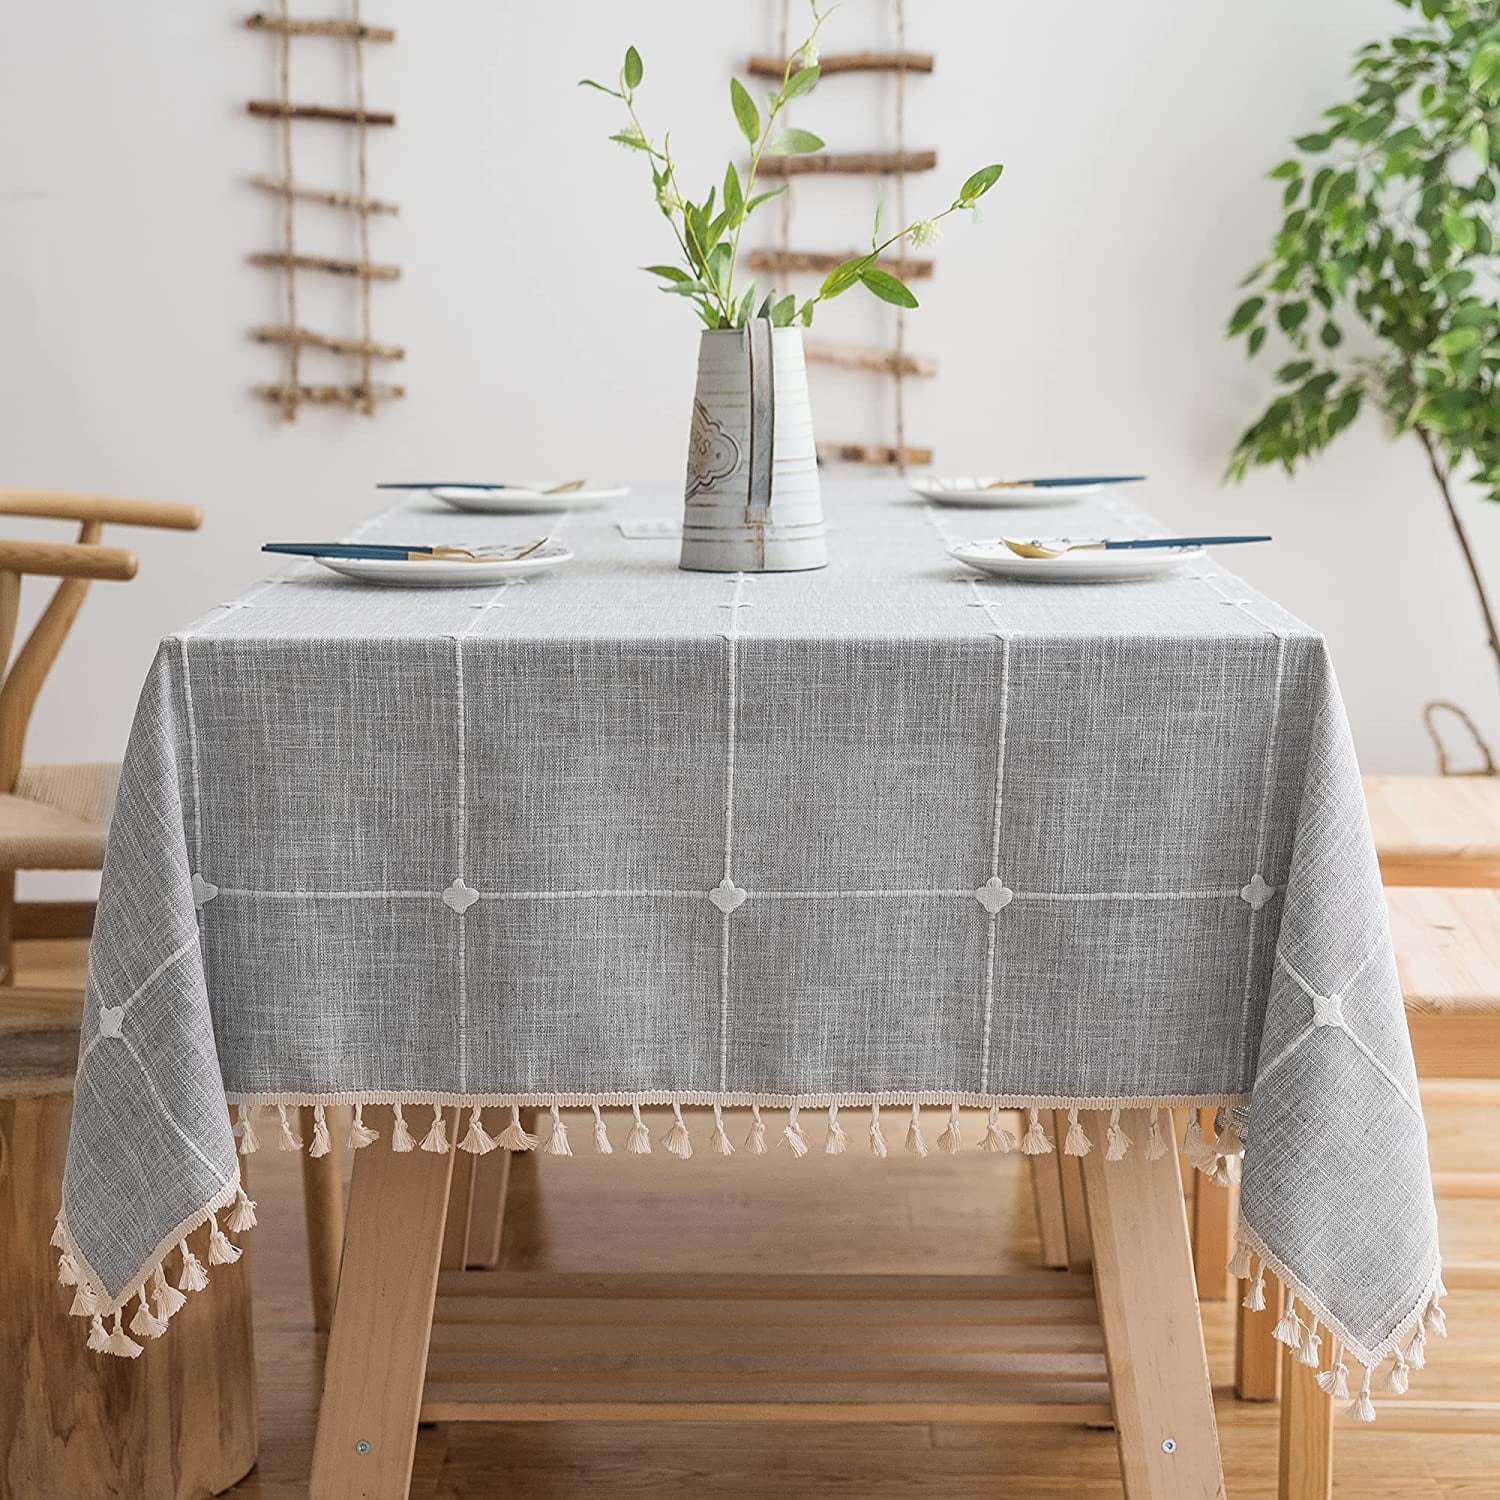 Rustic Lattice Tablecloth 55 X70, What Size Tablecloth Seats 6